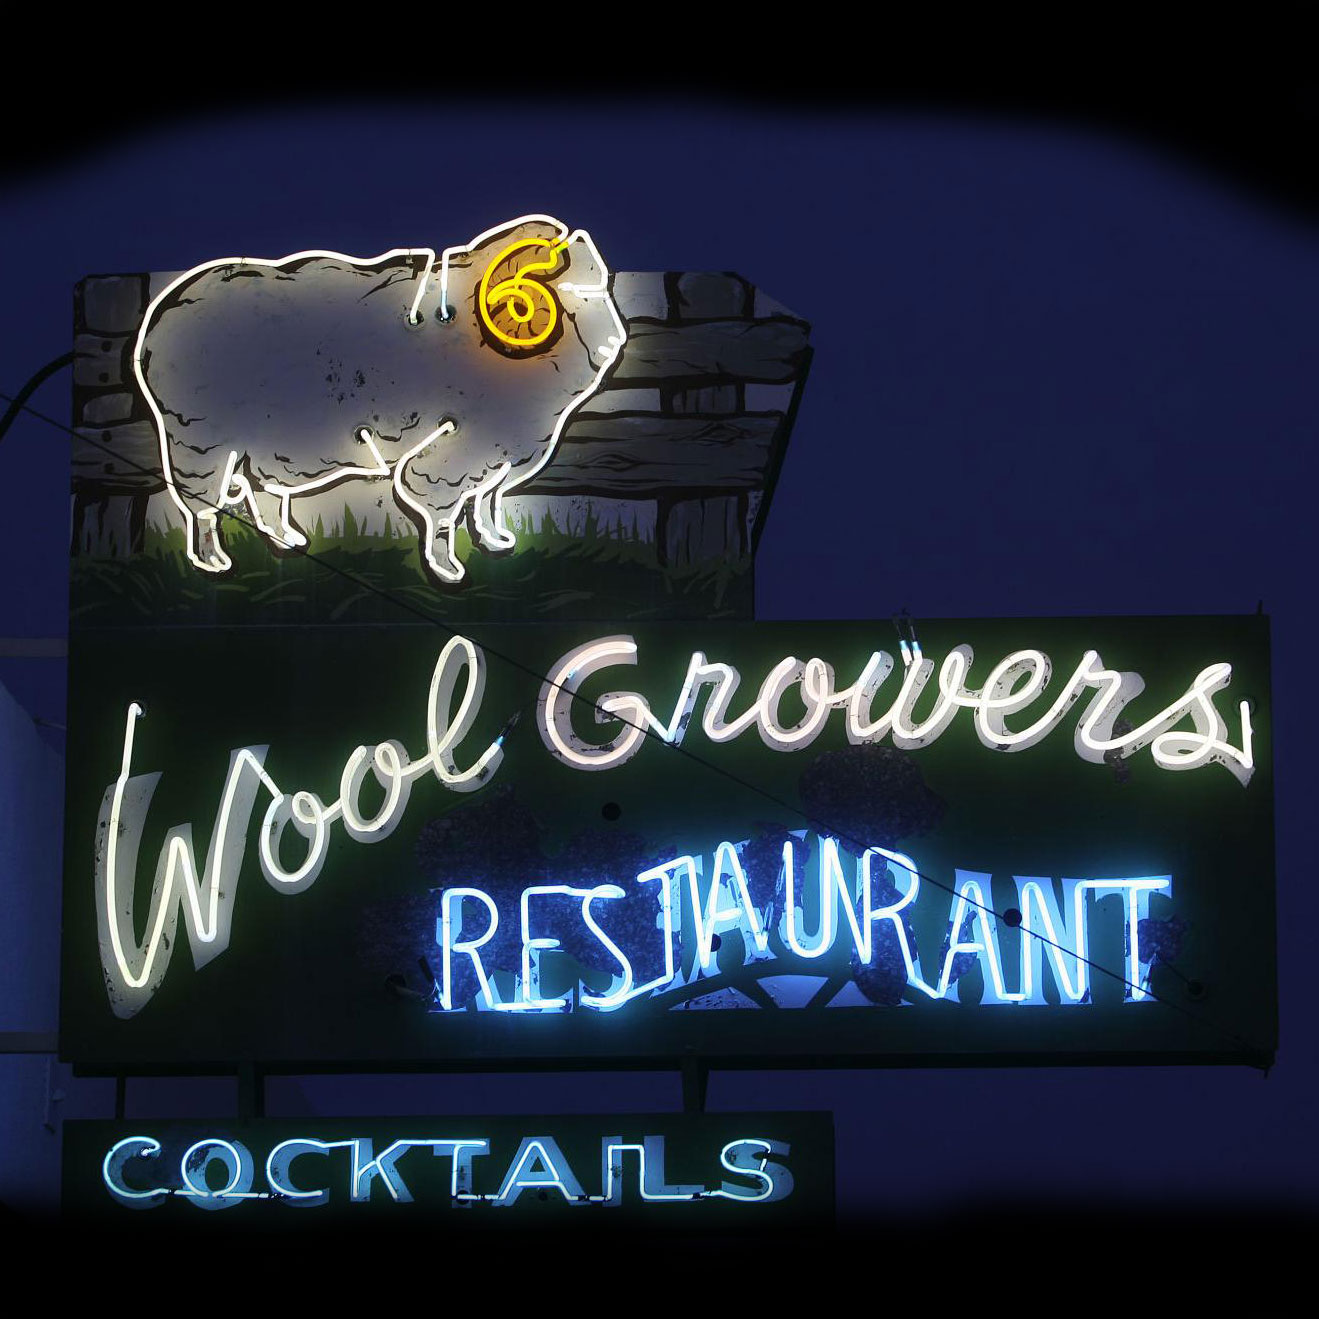 Wool Growers neon sign